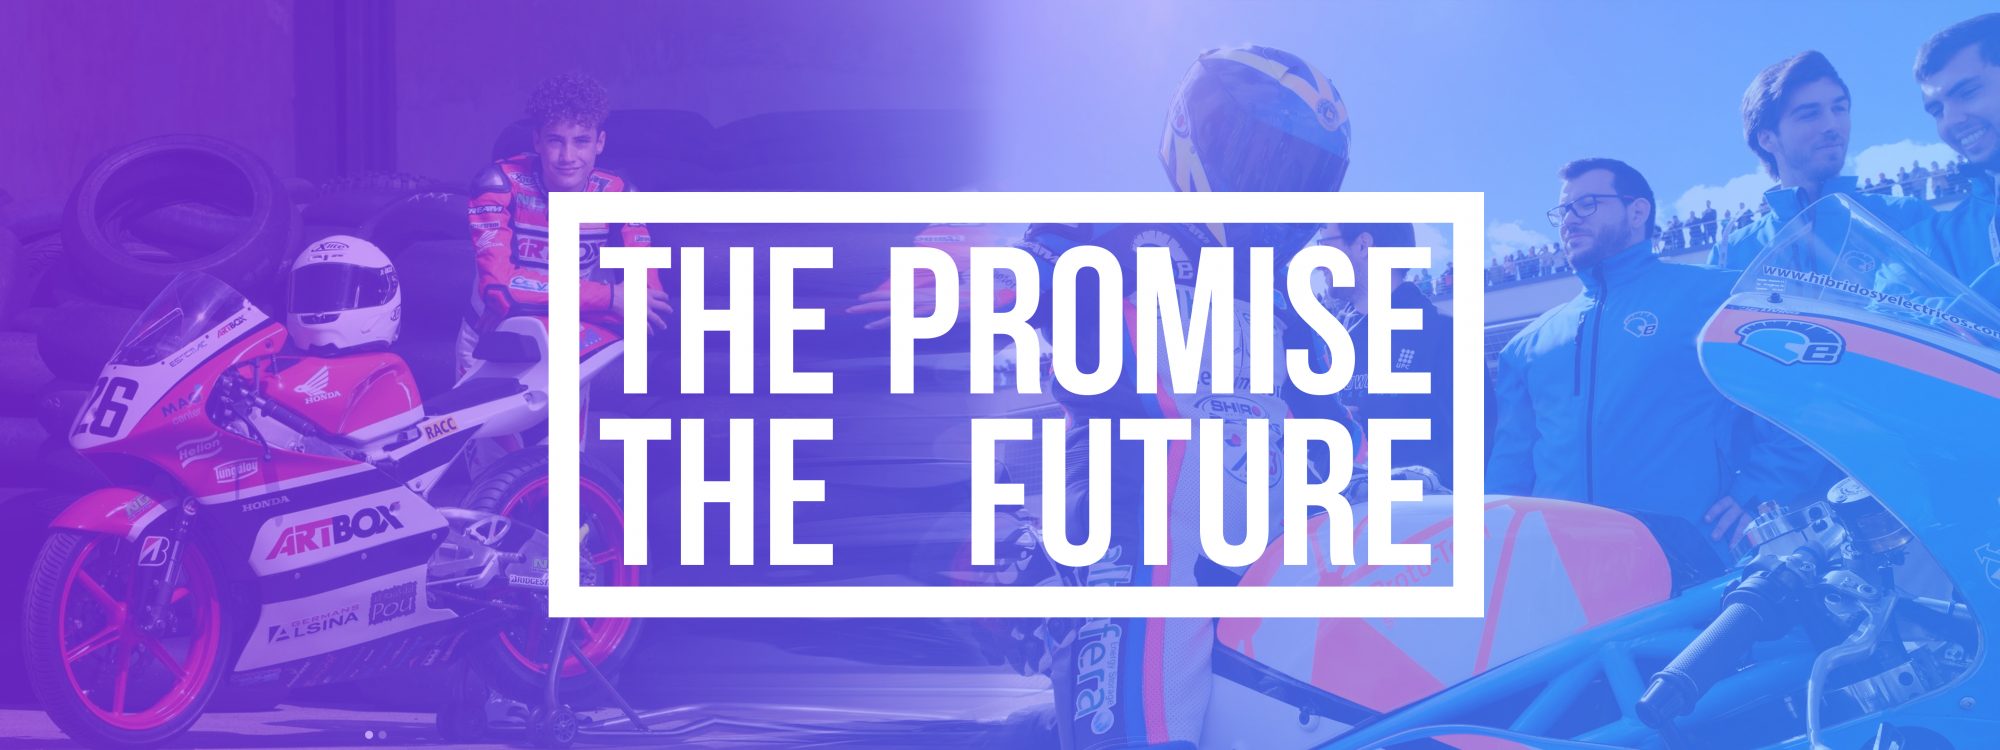 The Promise The Future: nouvelle campagne de collaboration